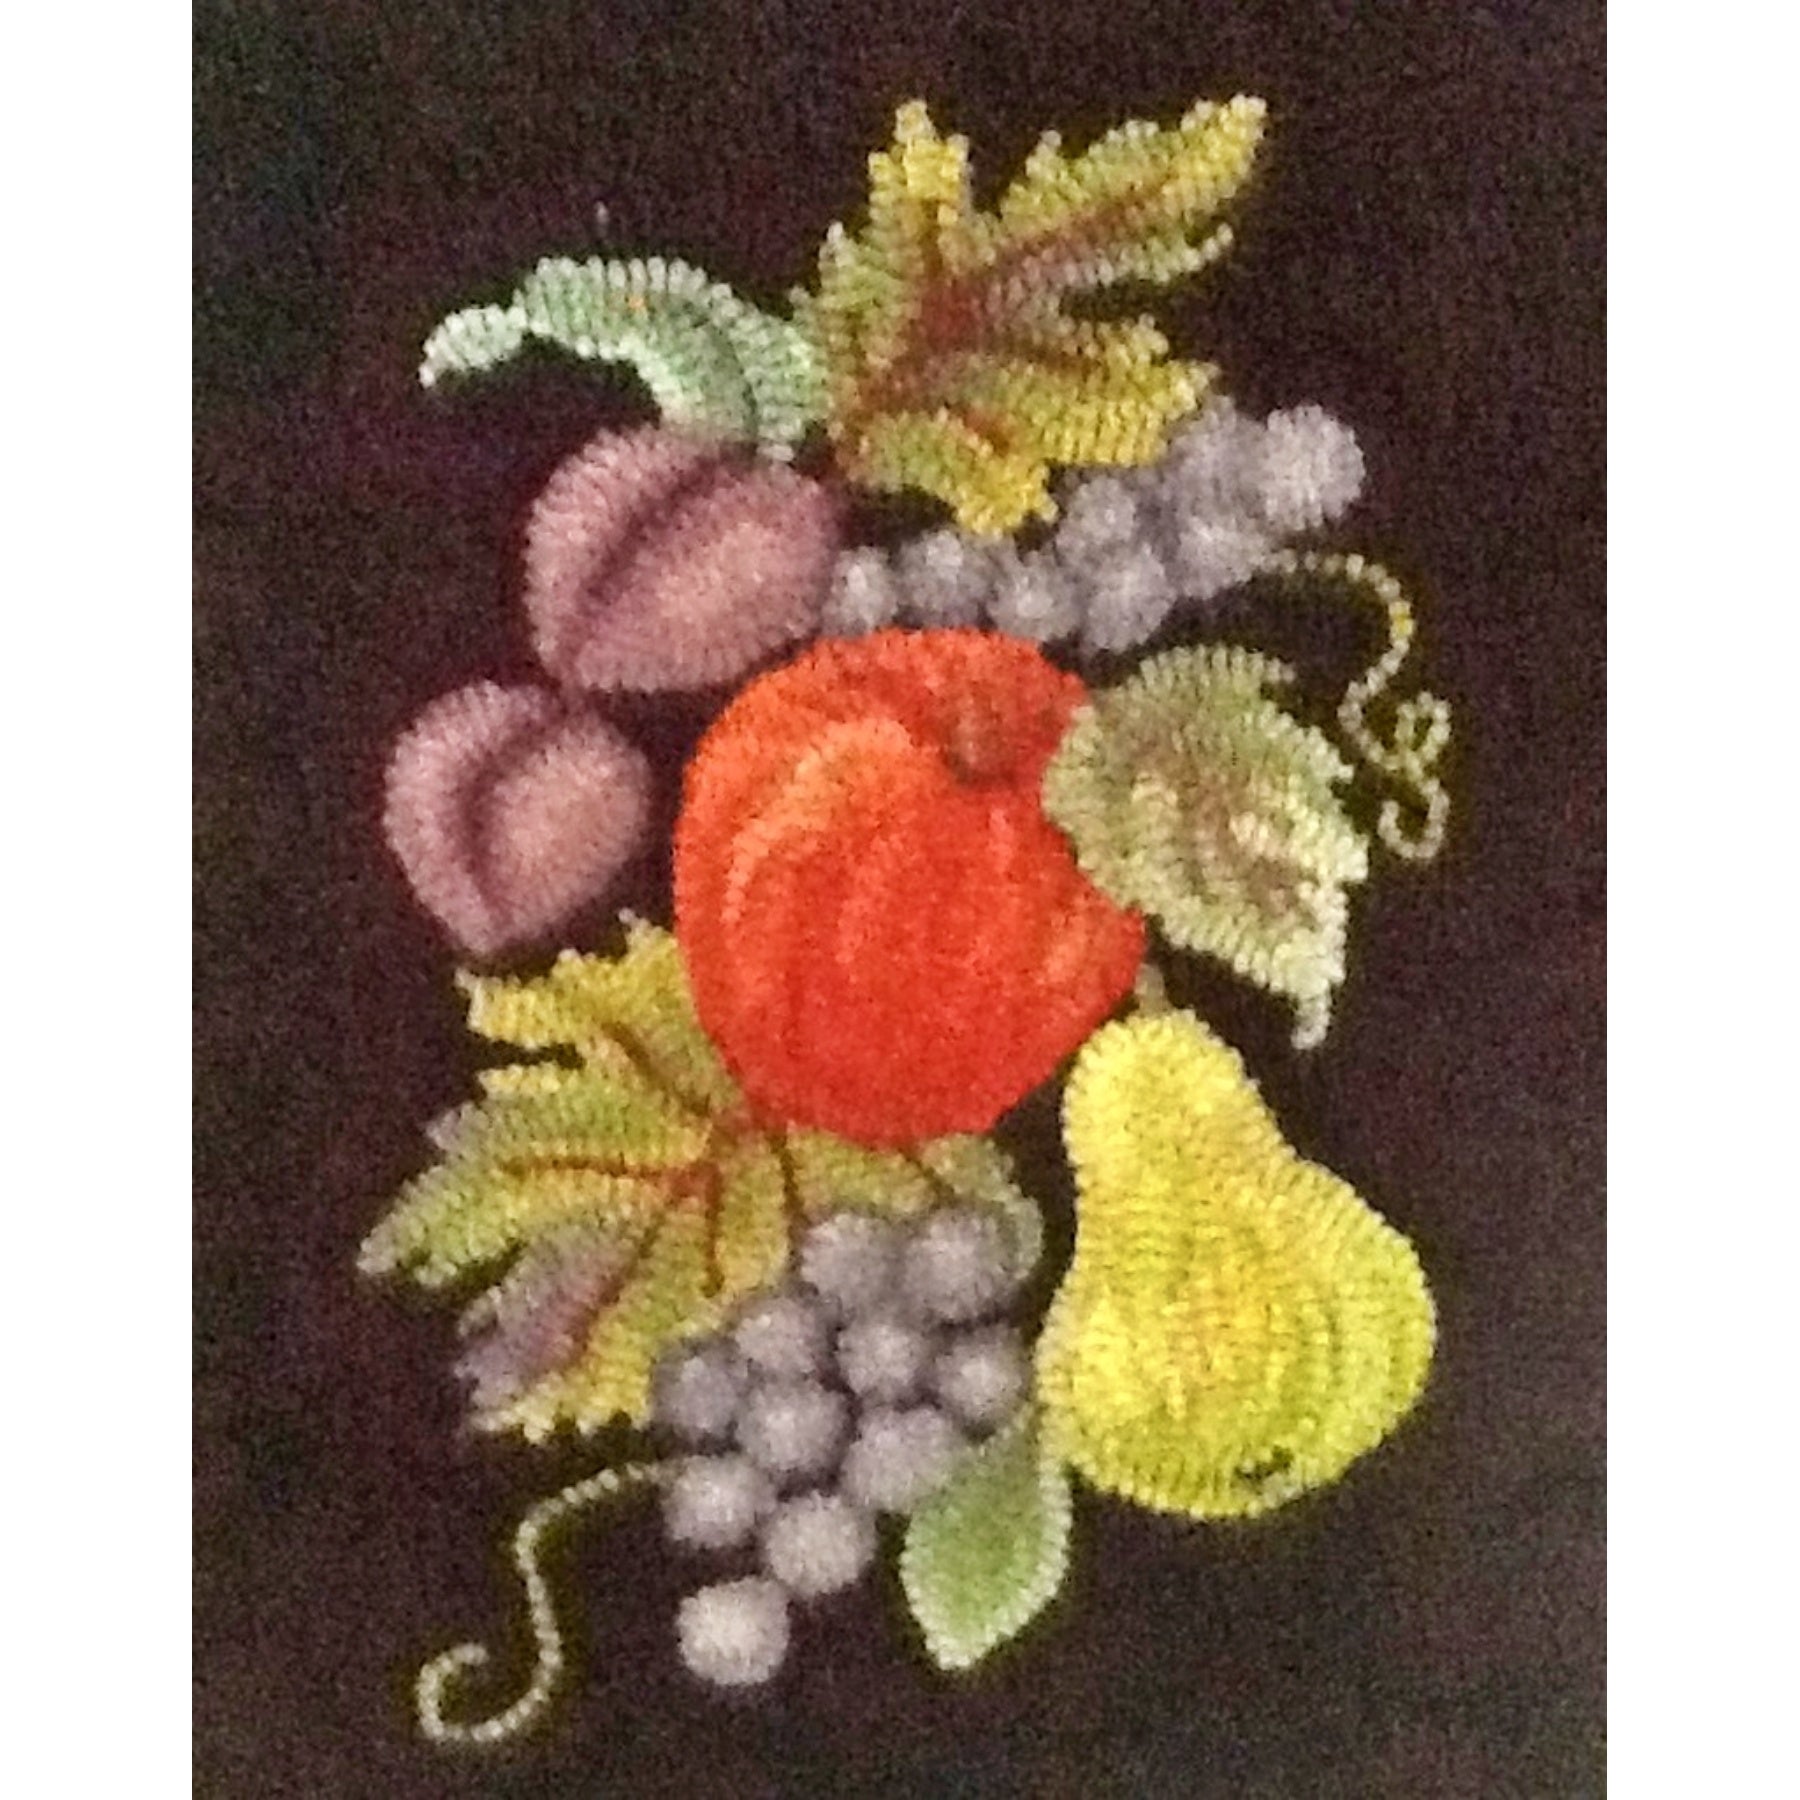 Fruit, rug hooked by Linda Marchbank